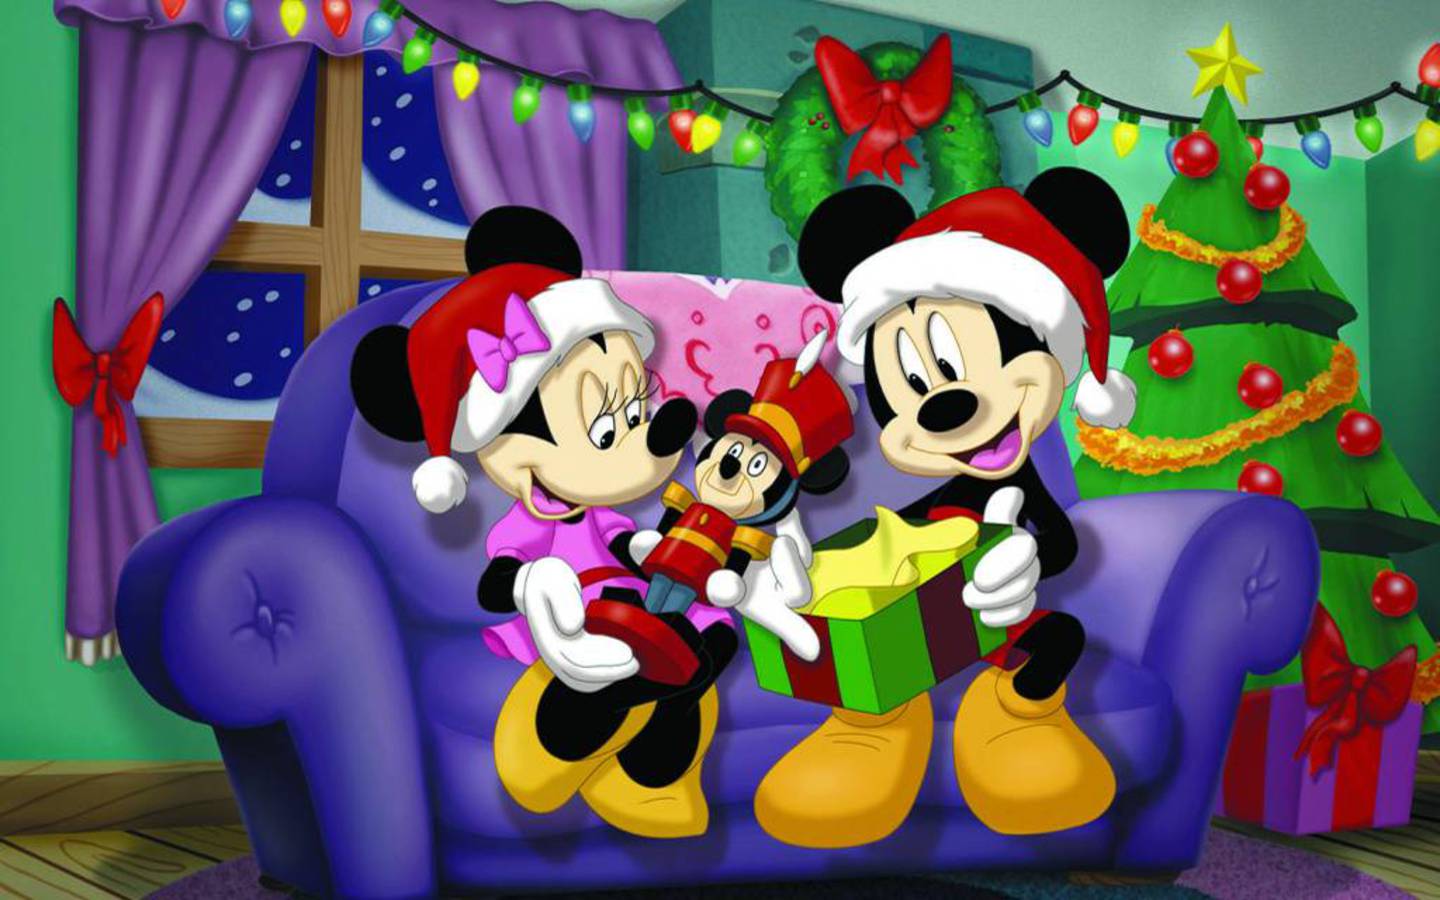 Disney Christmas Backgrounds Desktop